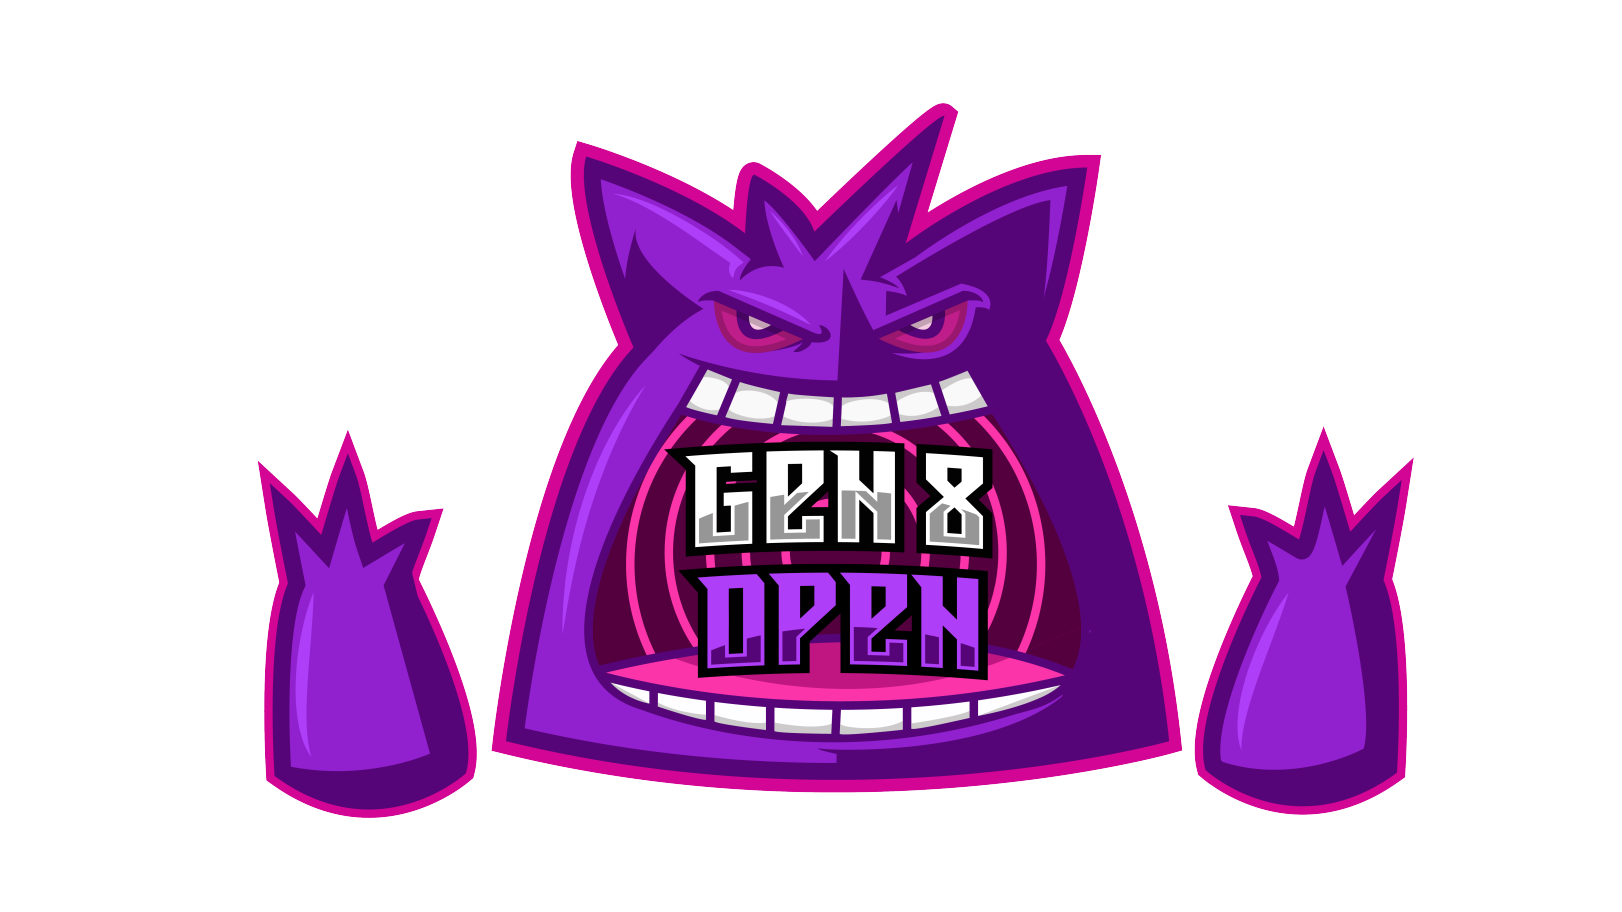 gen_8_open_logo-1-01.png